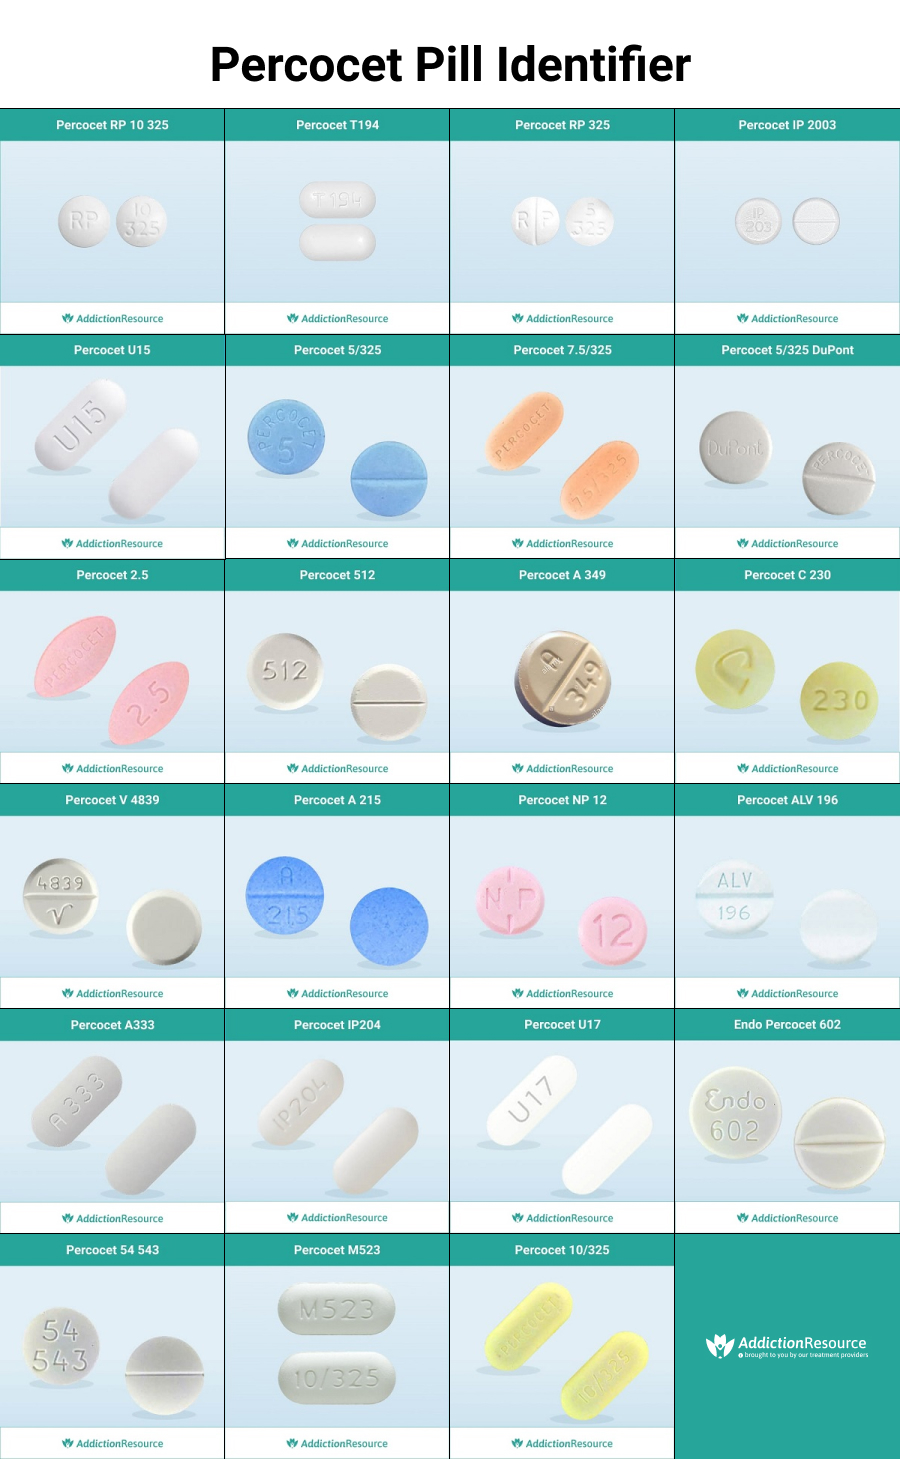 Percocet Pill Identifier Explained